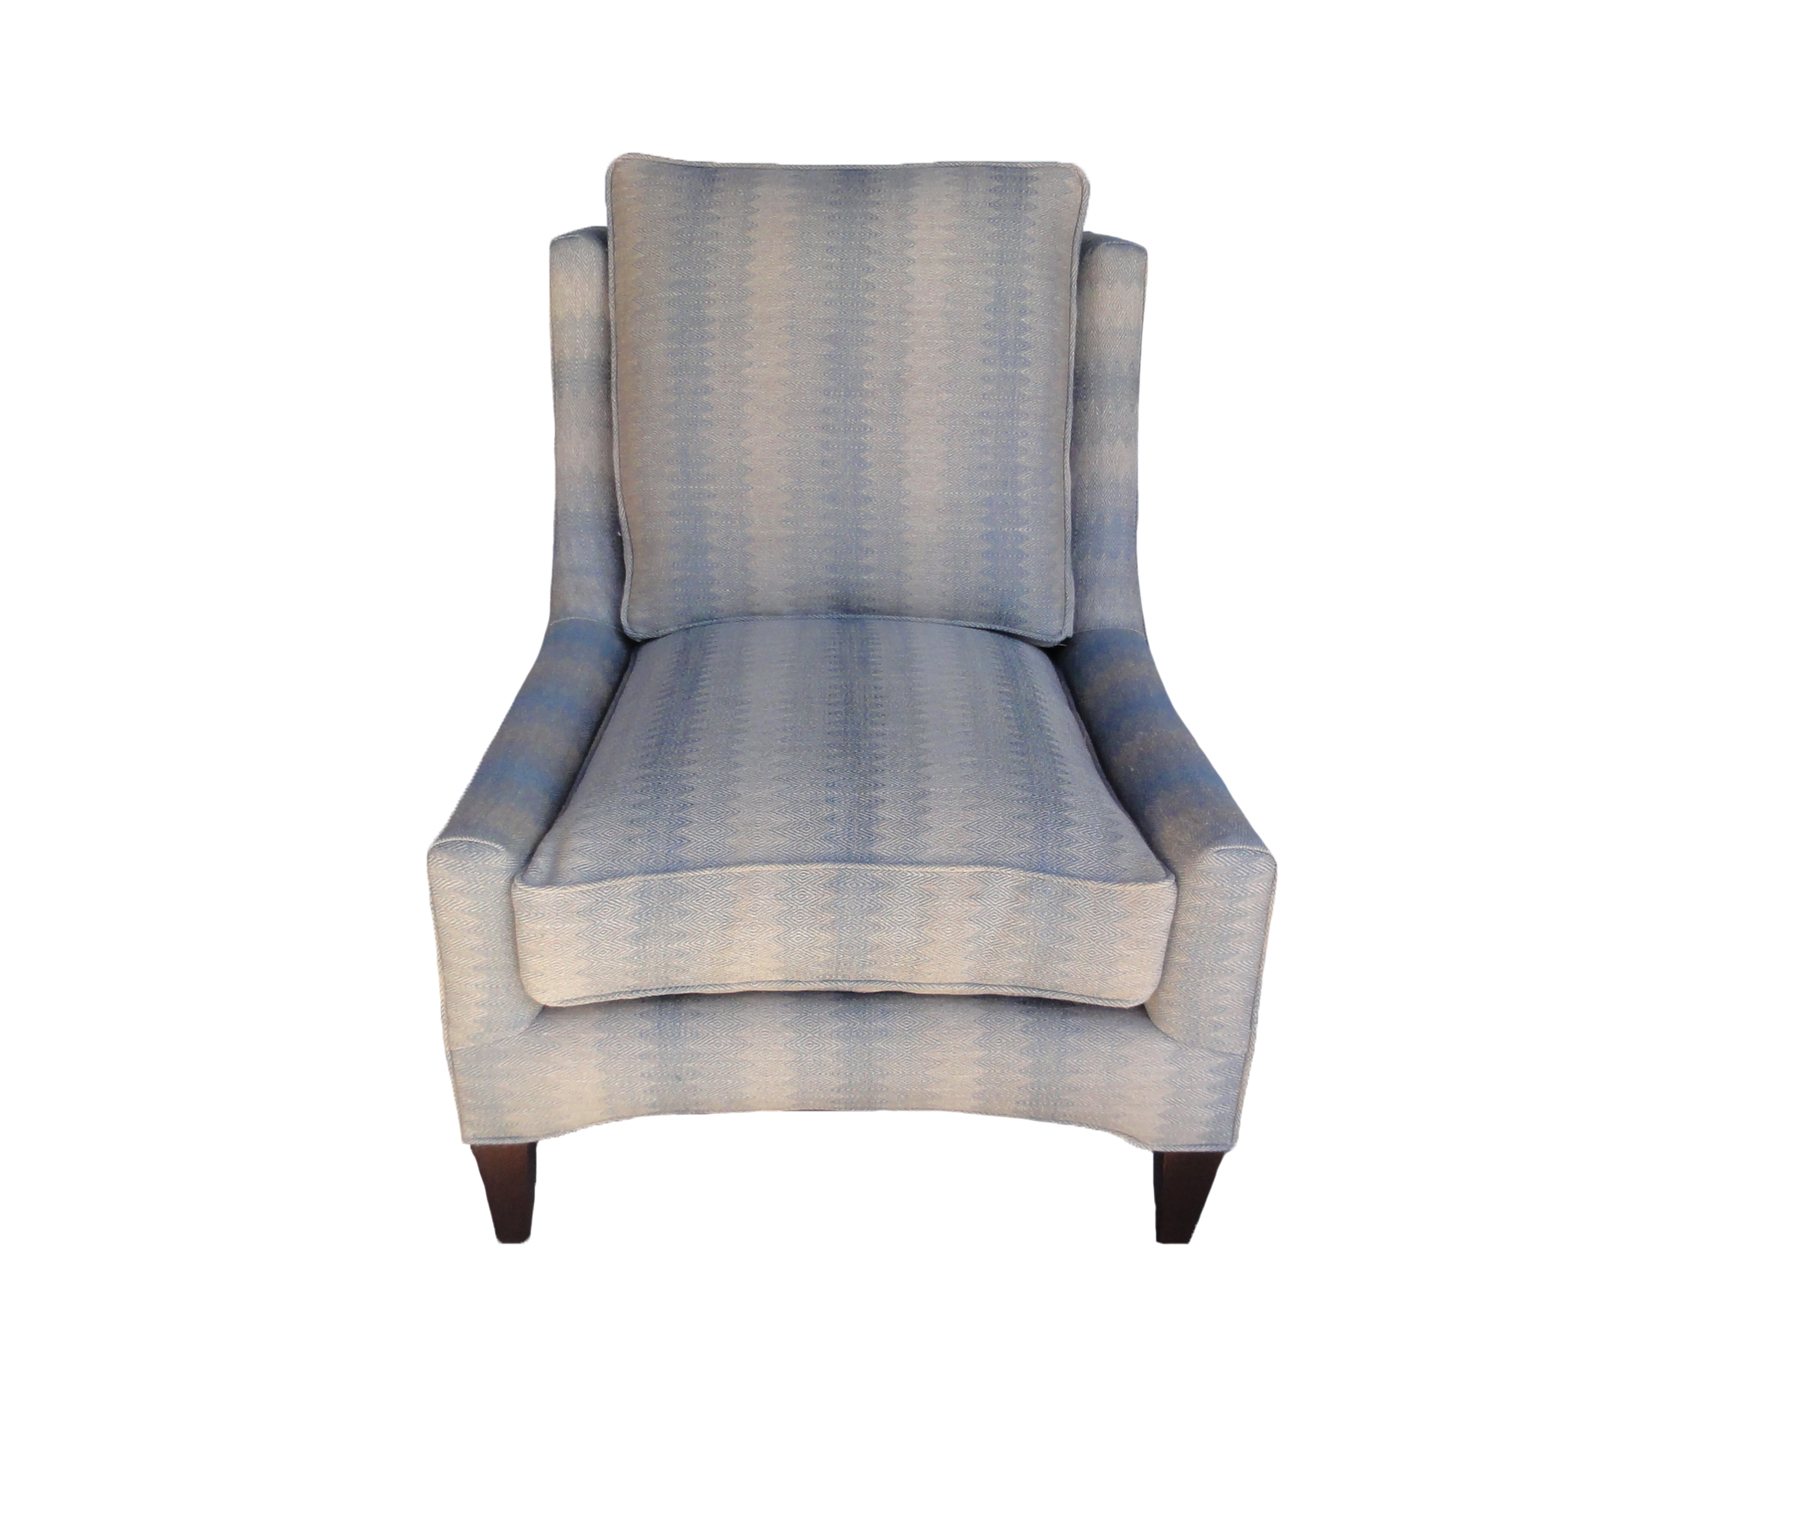 Patterned Logata Club Chair santa barbara design center sofa couch loveseat highback